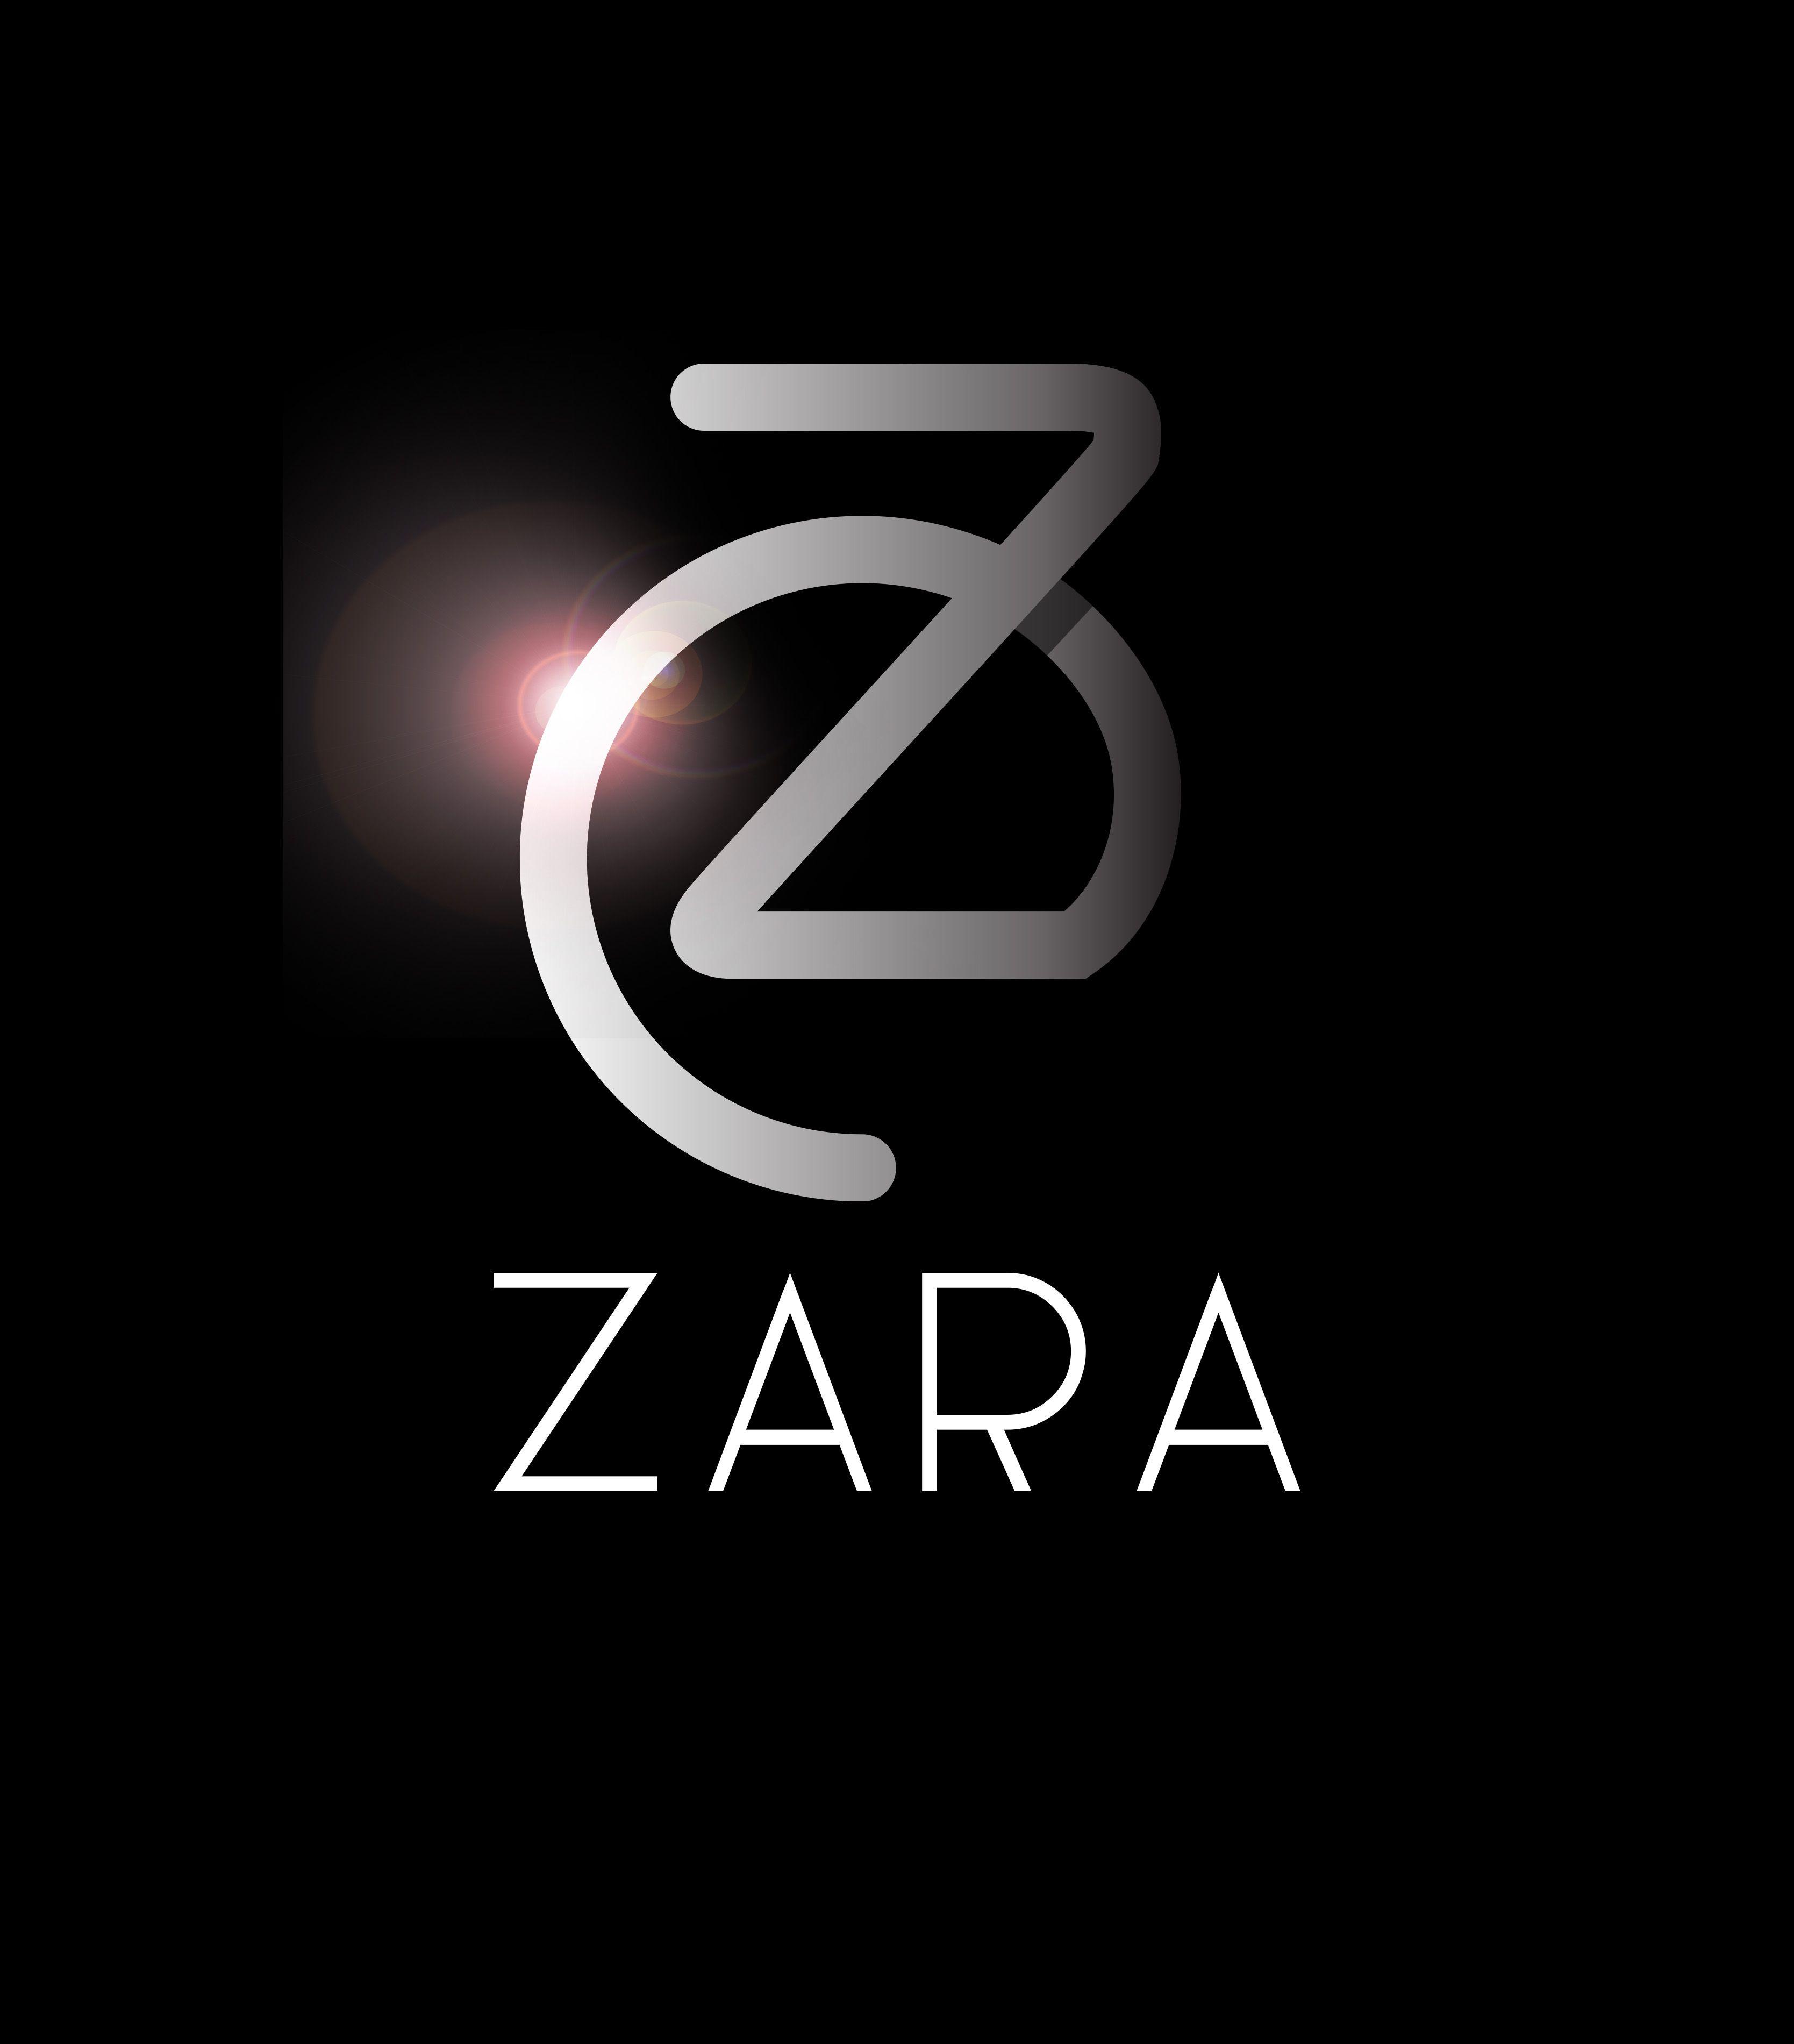 Zara Logo - Bryan Barocio - Zara Logo Design